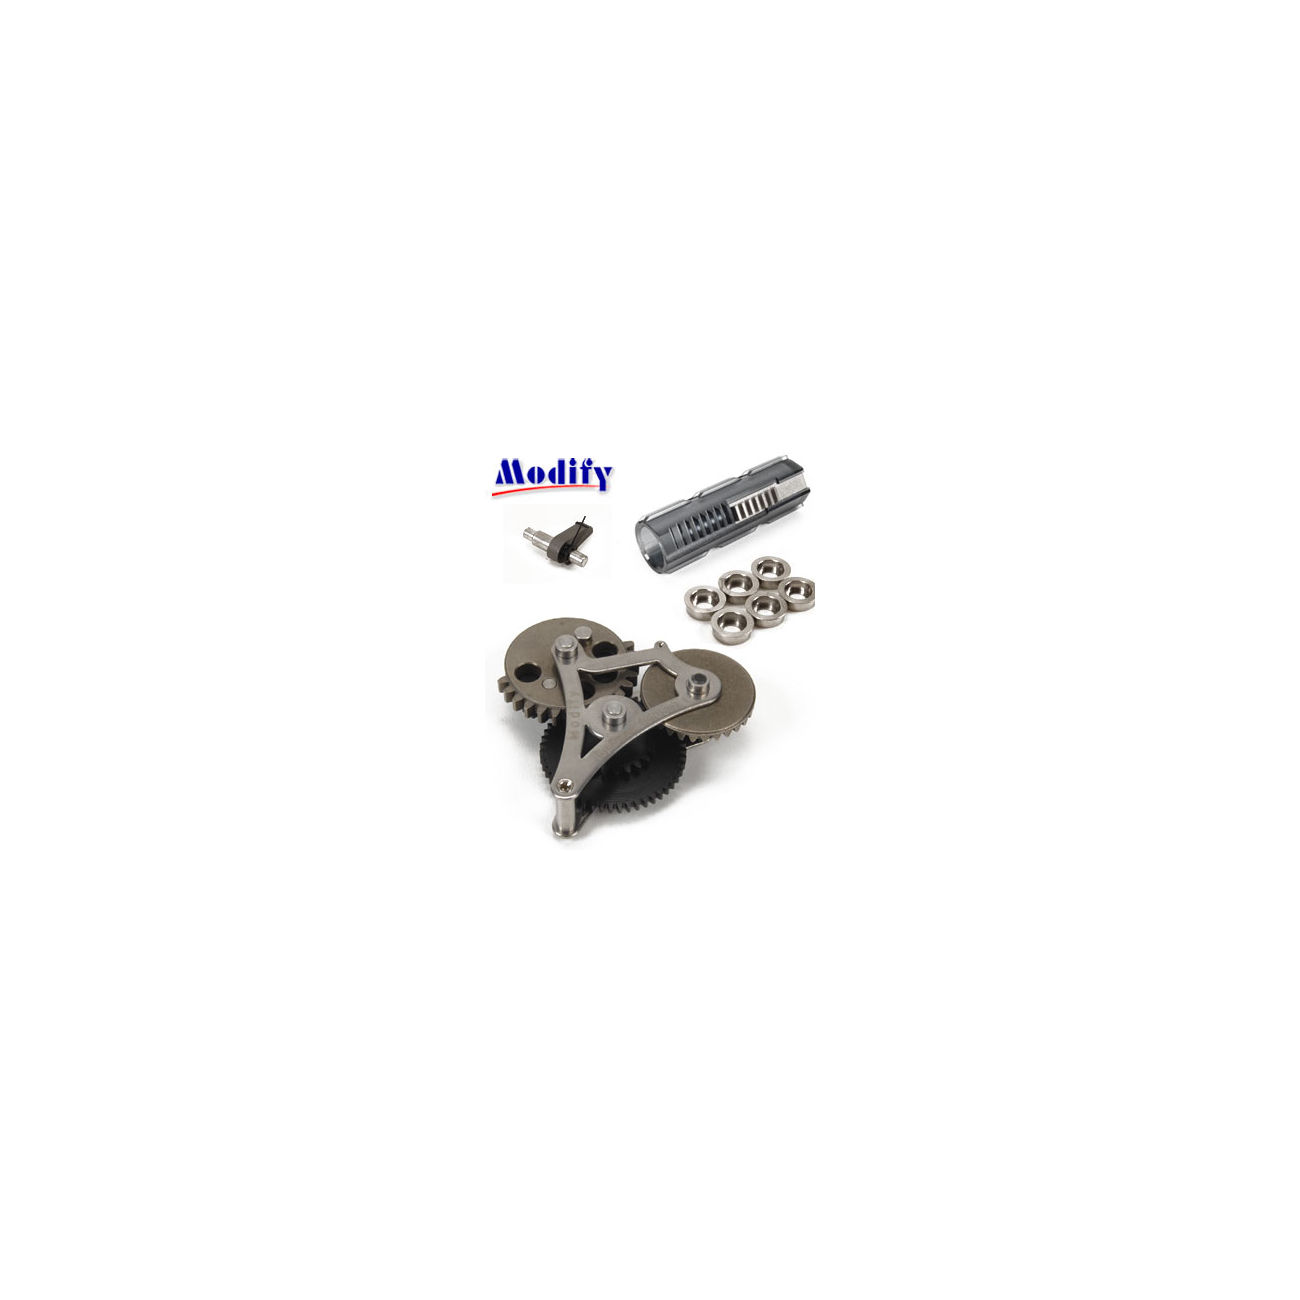 Modify Modular Gear Set 6.0mm - Top Torque